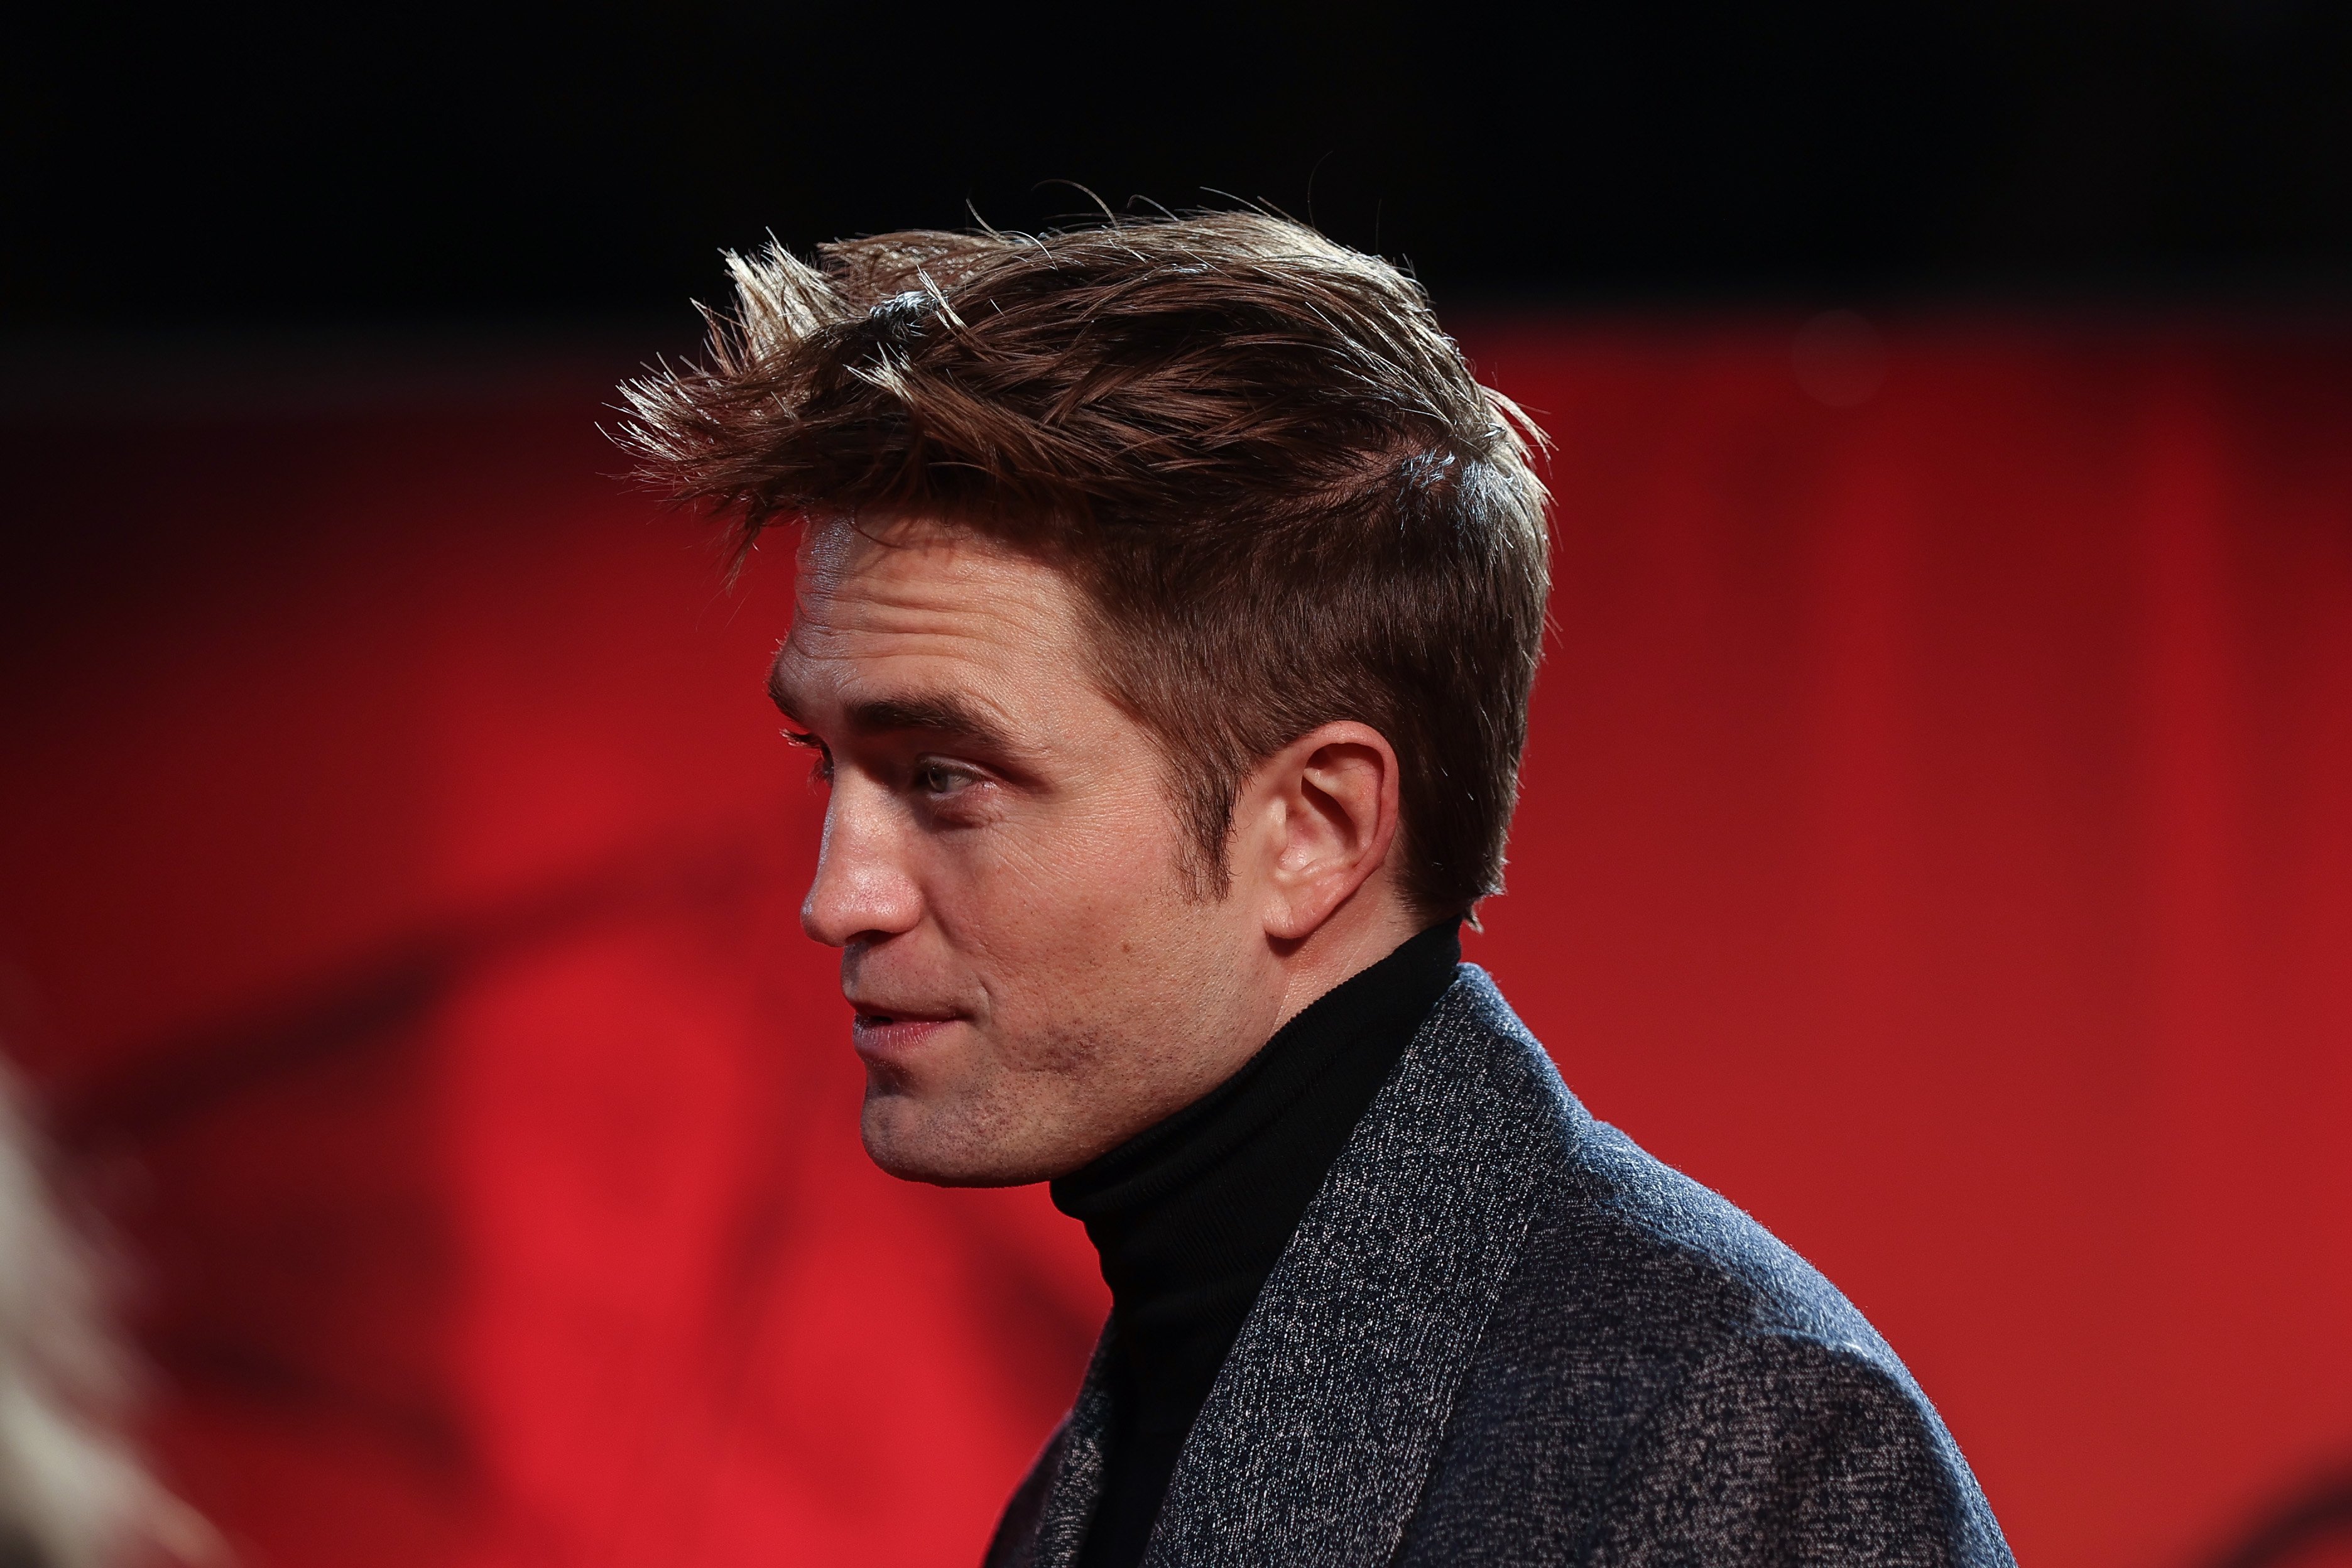 'The Batman' star Robert Pattinson wears a gray coat over a black turtleneck.